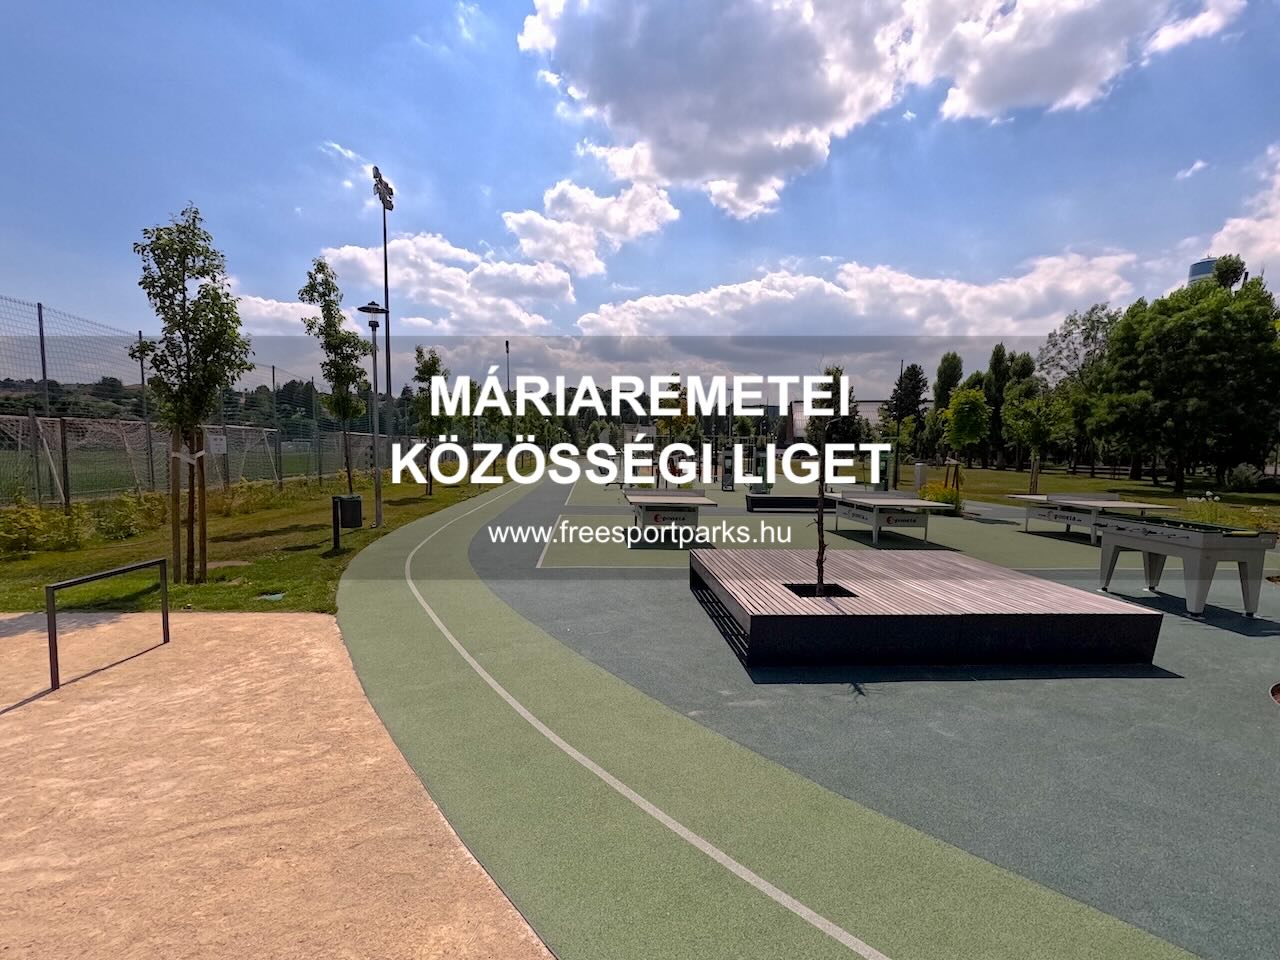 Máriaremetei Közösségi Liget - Free Sport Parks Blog